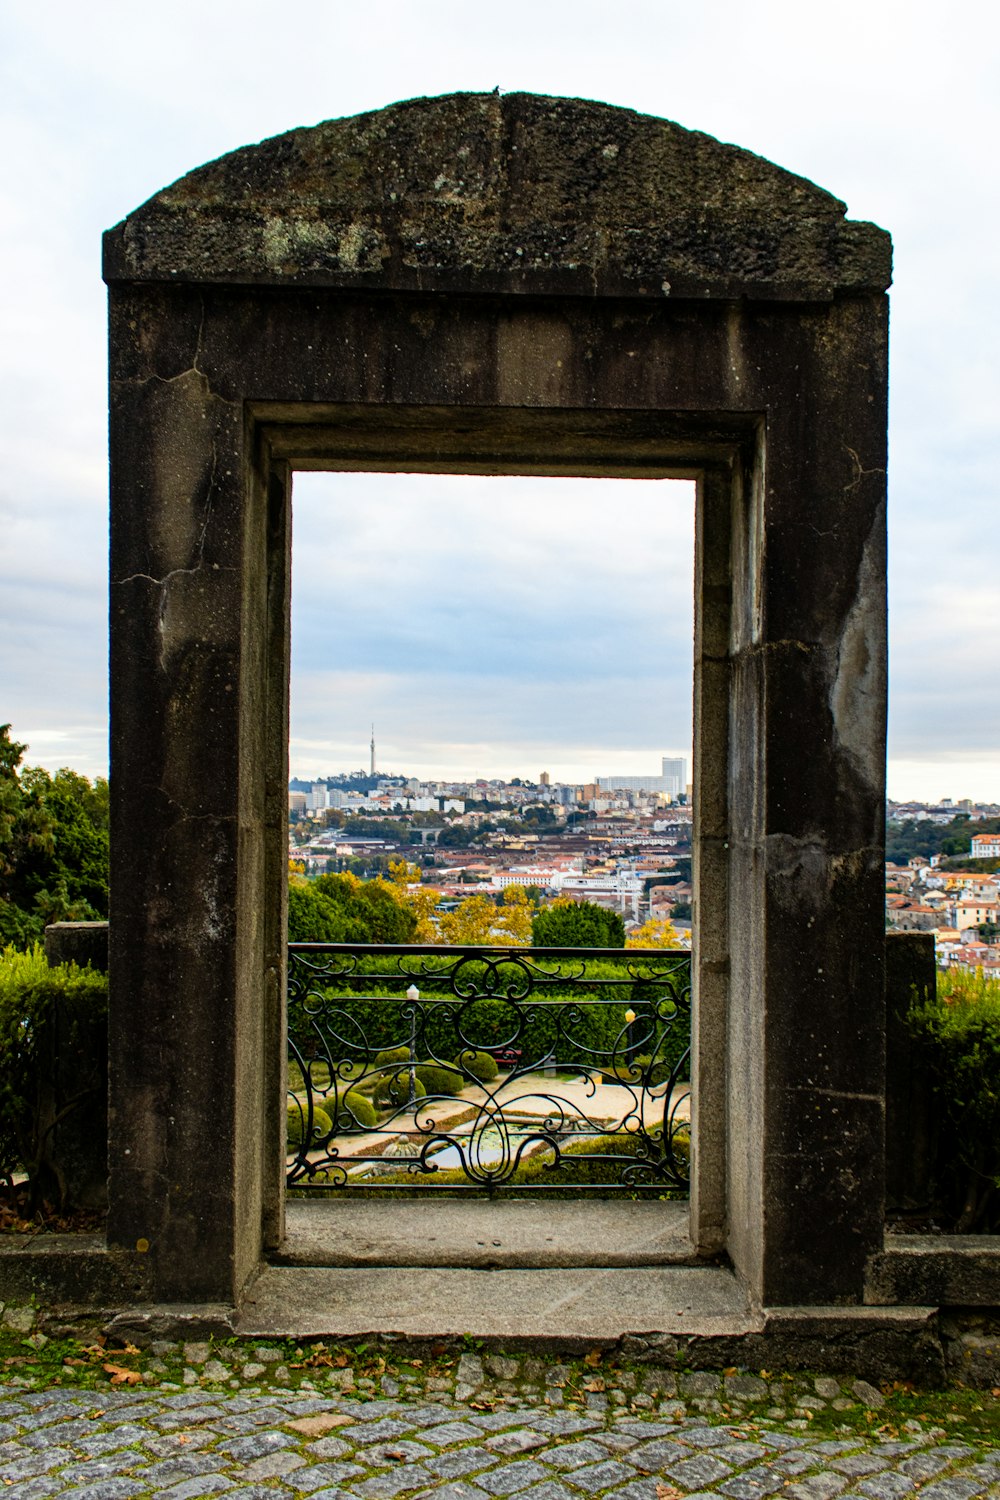 a view of a city through a gate